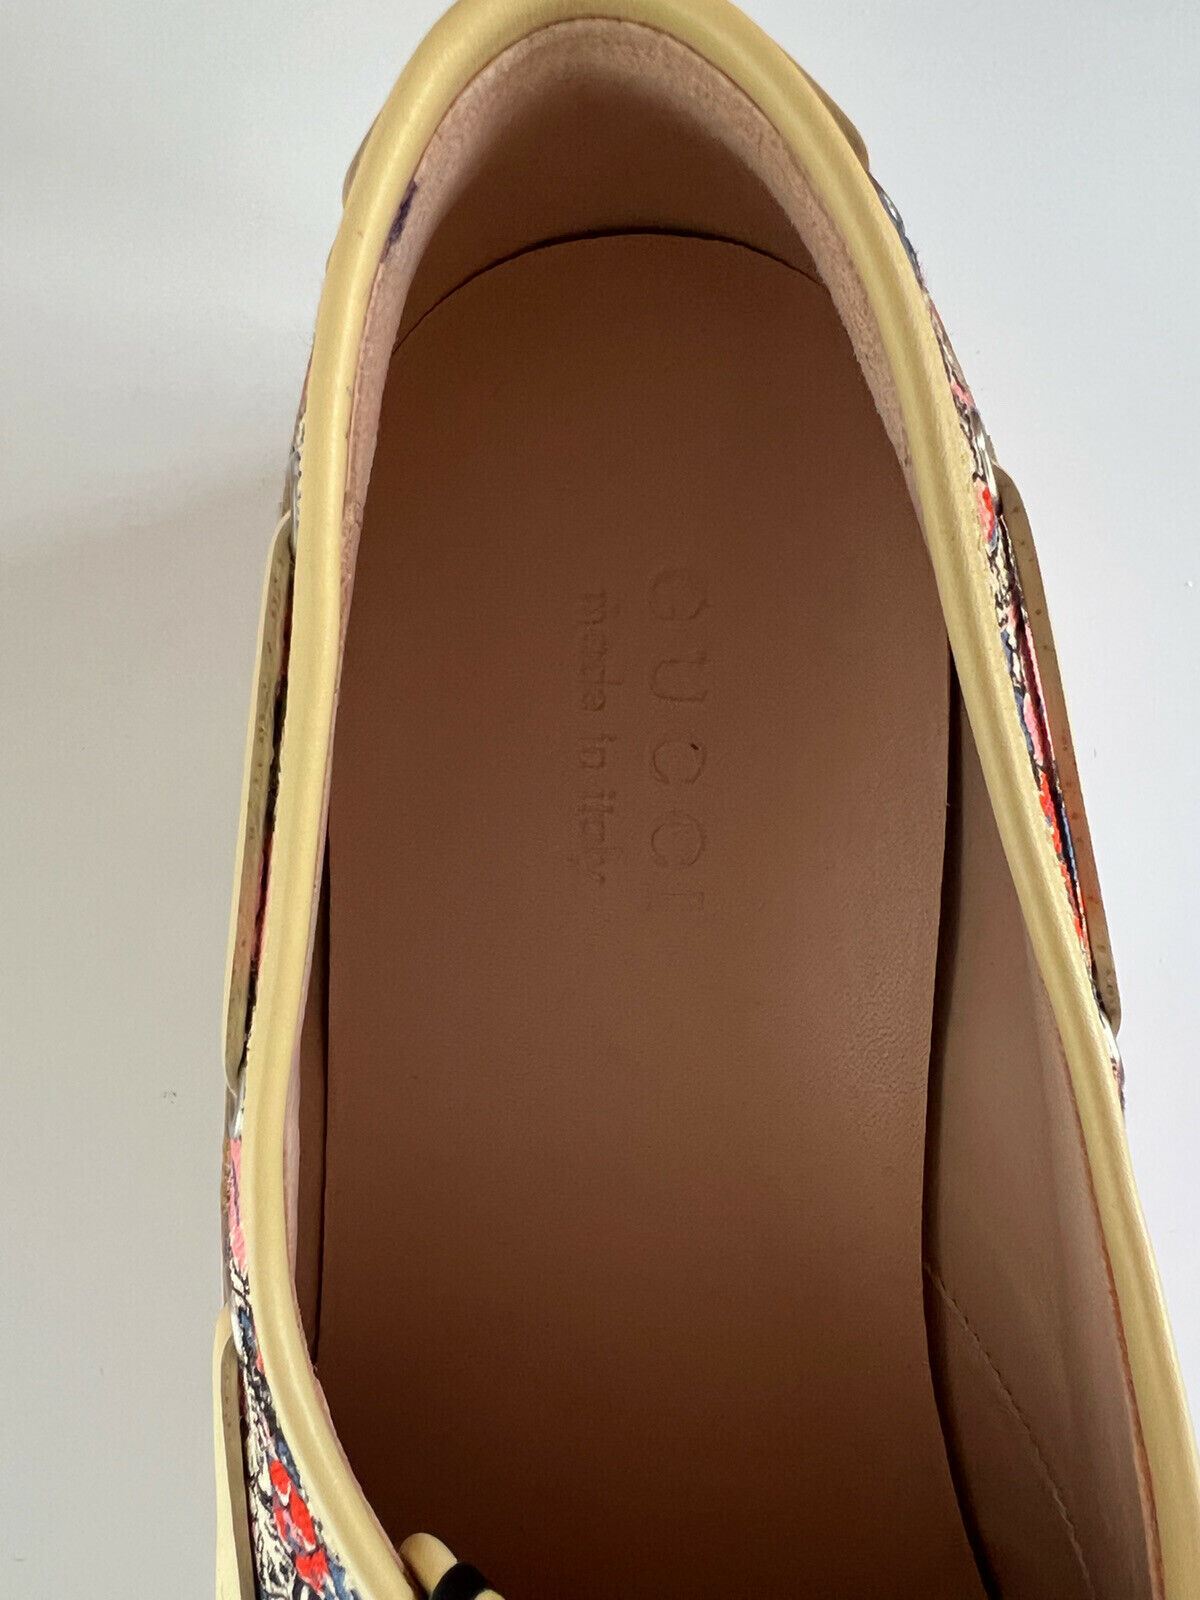 New Gucci GG Men’s Liberty Floral Boat Shoes 9.5 US (Gucci 9) 547641